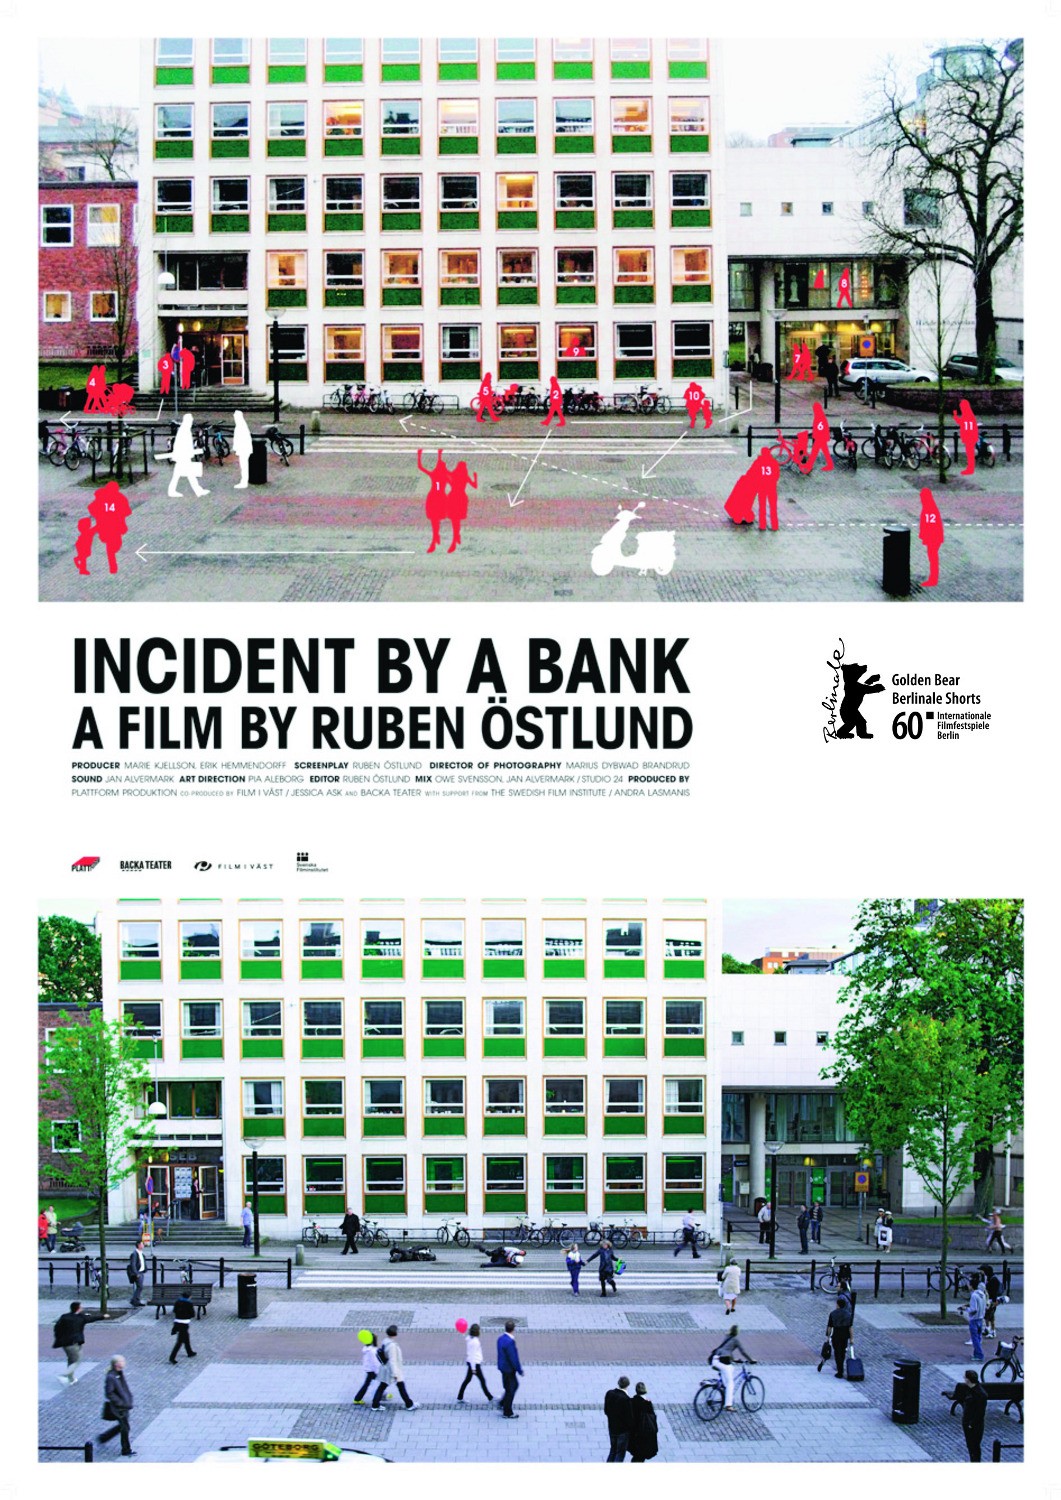 Extra Large Movie Poster Image for Hndelse vid bank